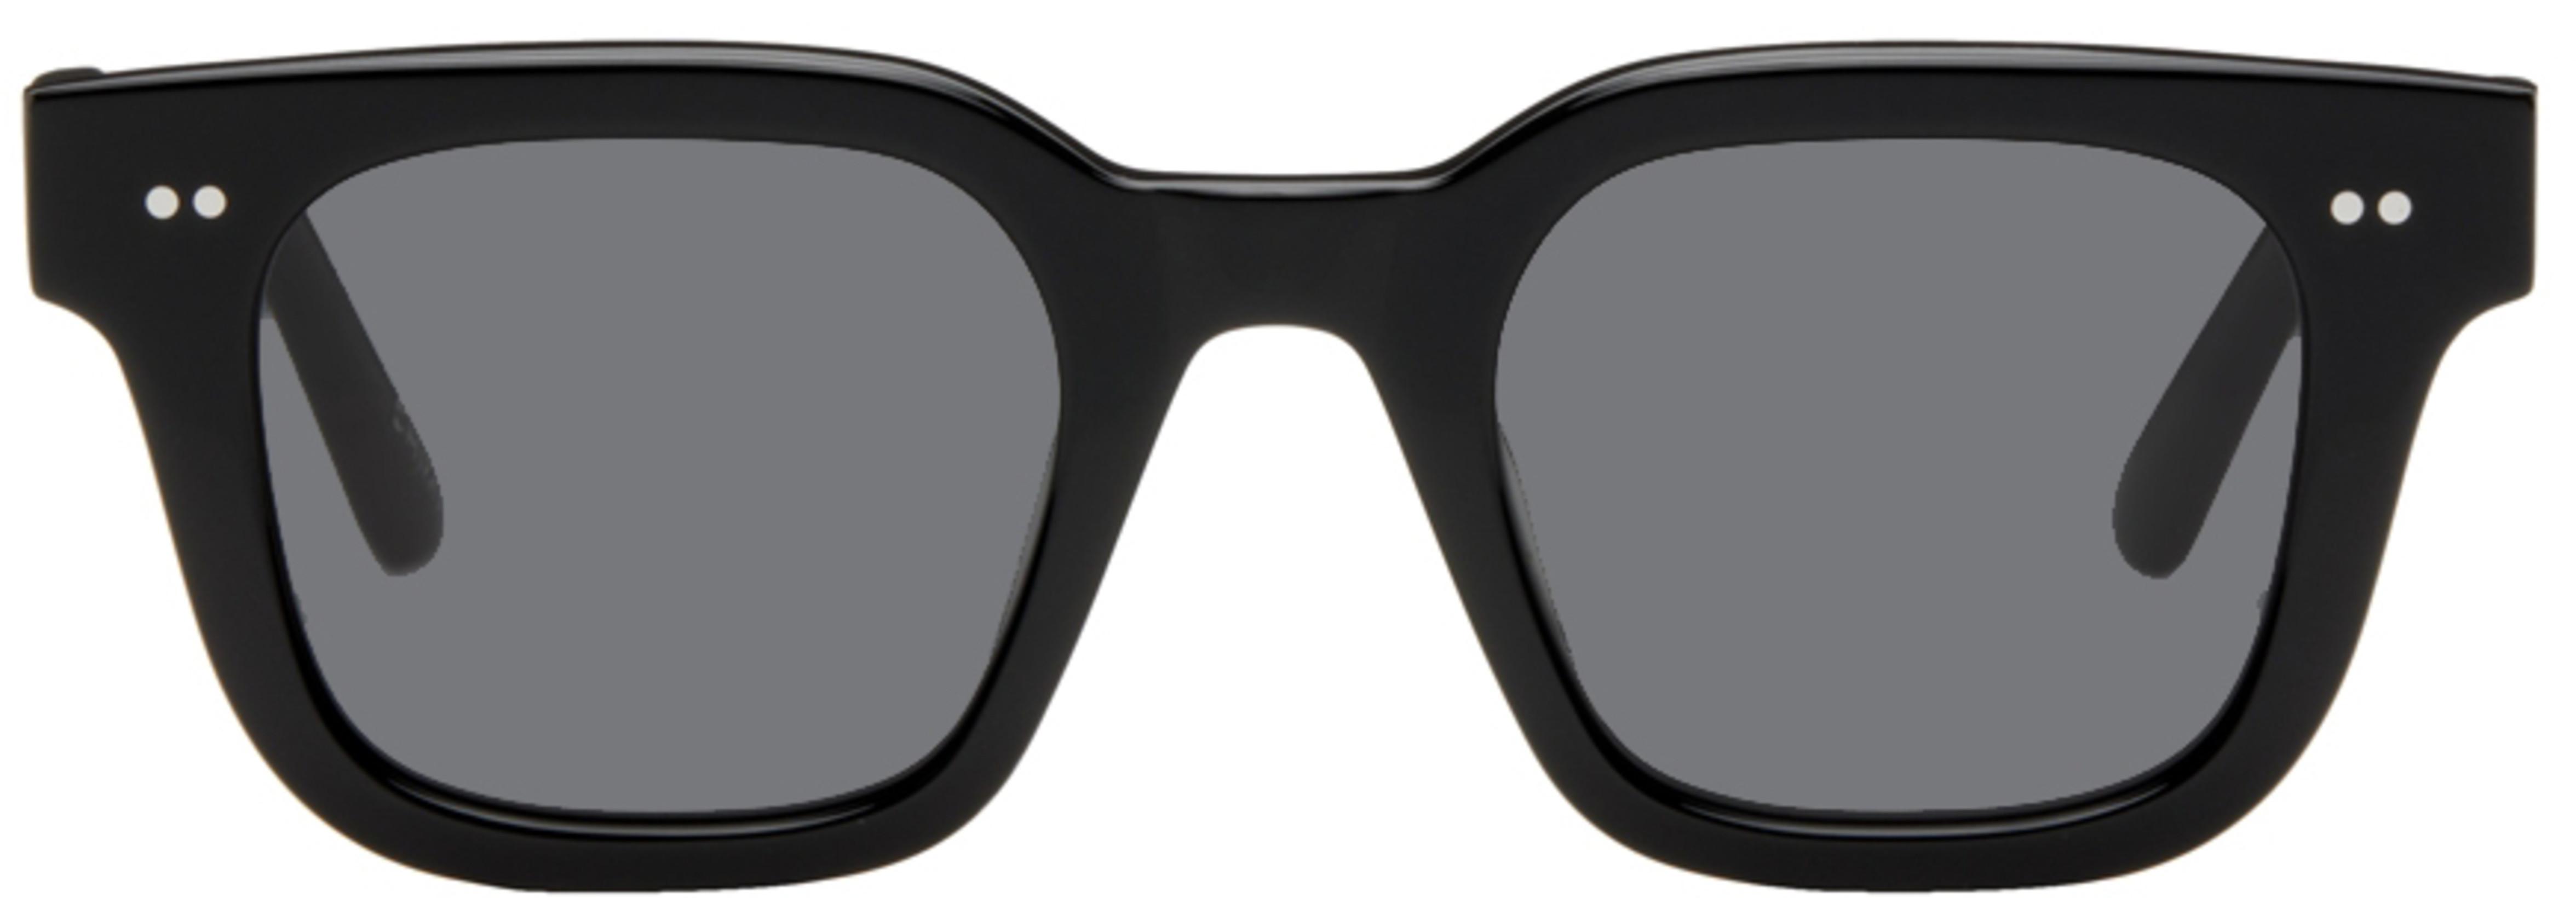 Black 04 Sunglasses by CHIMI